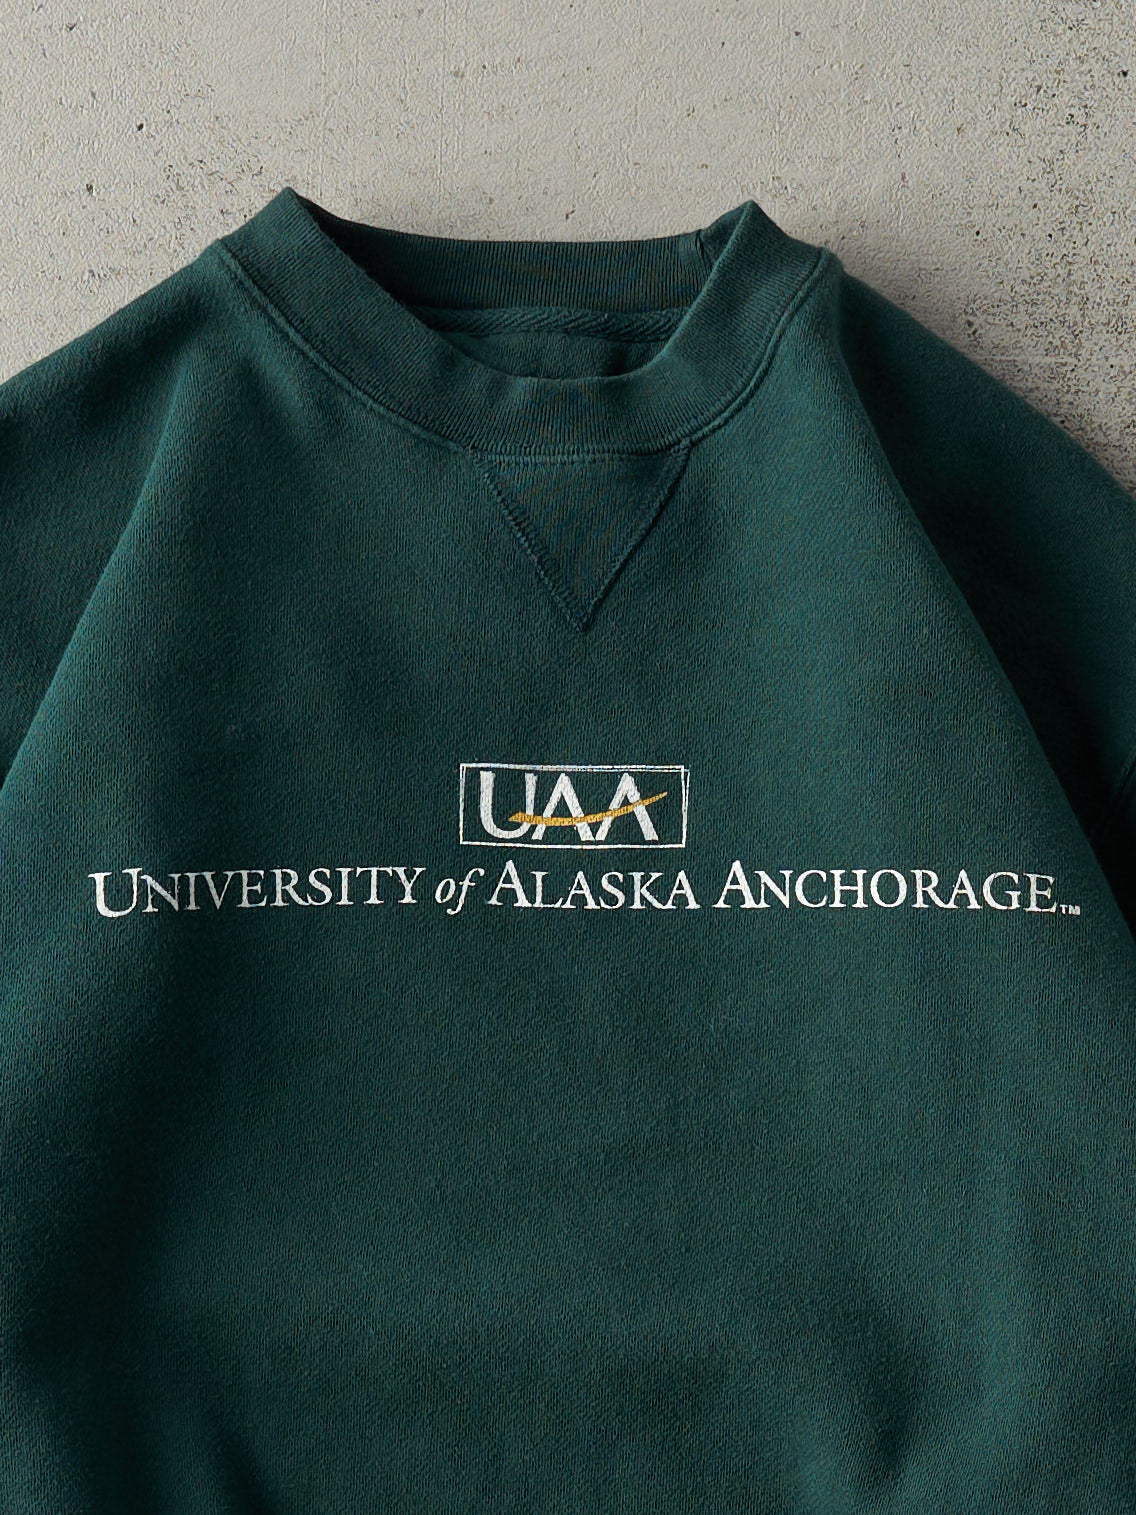 Vintage 90s Green University of Alaska Anchorage Crewneck (M)